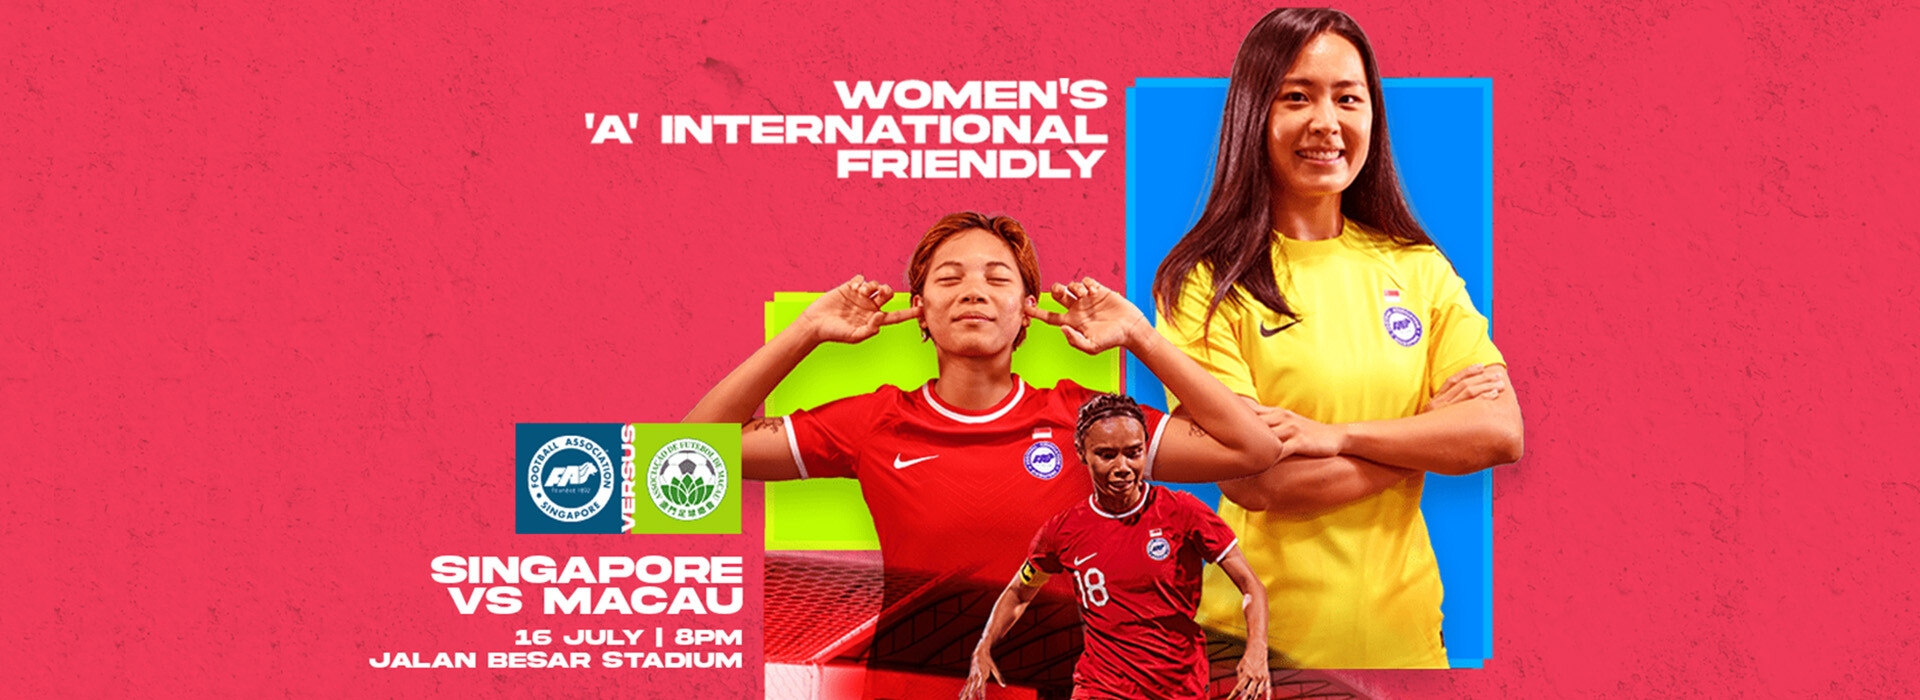 Women's 'A' International Friendly - Singapore vs Macau